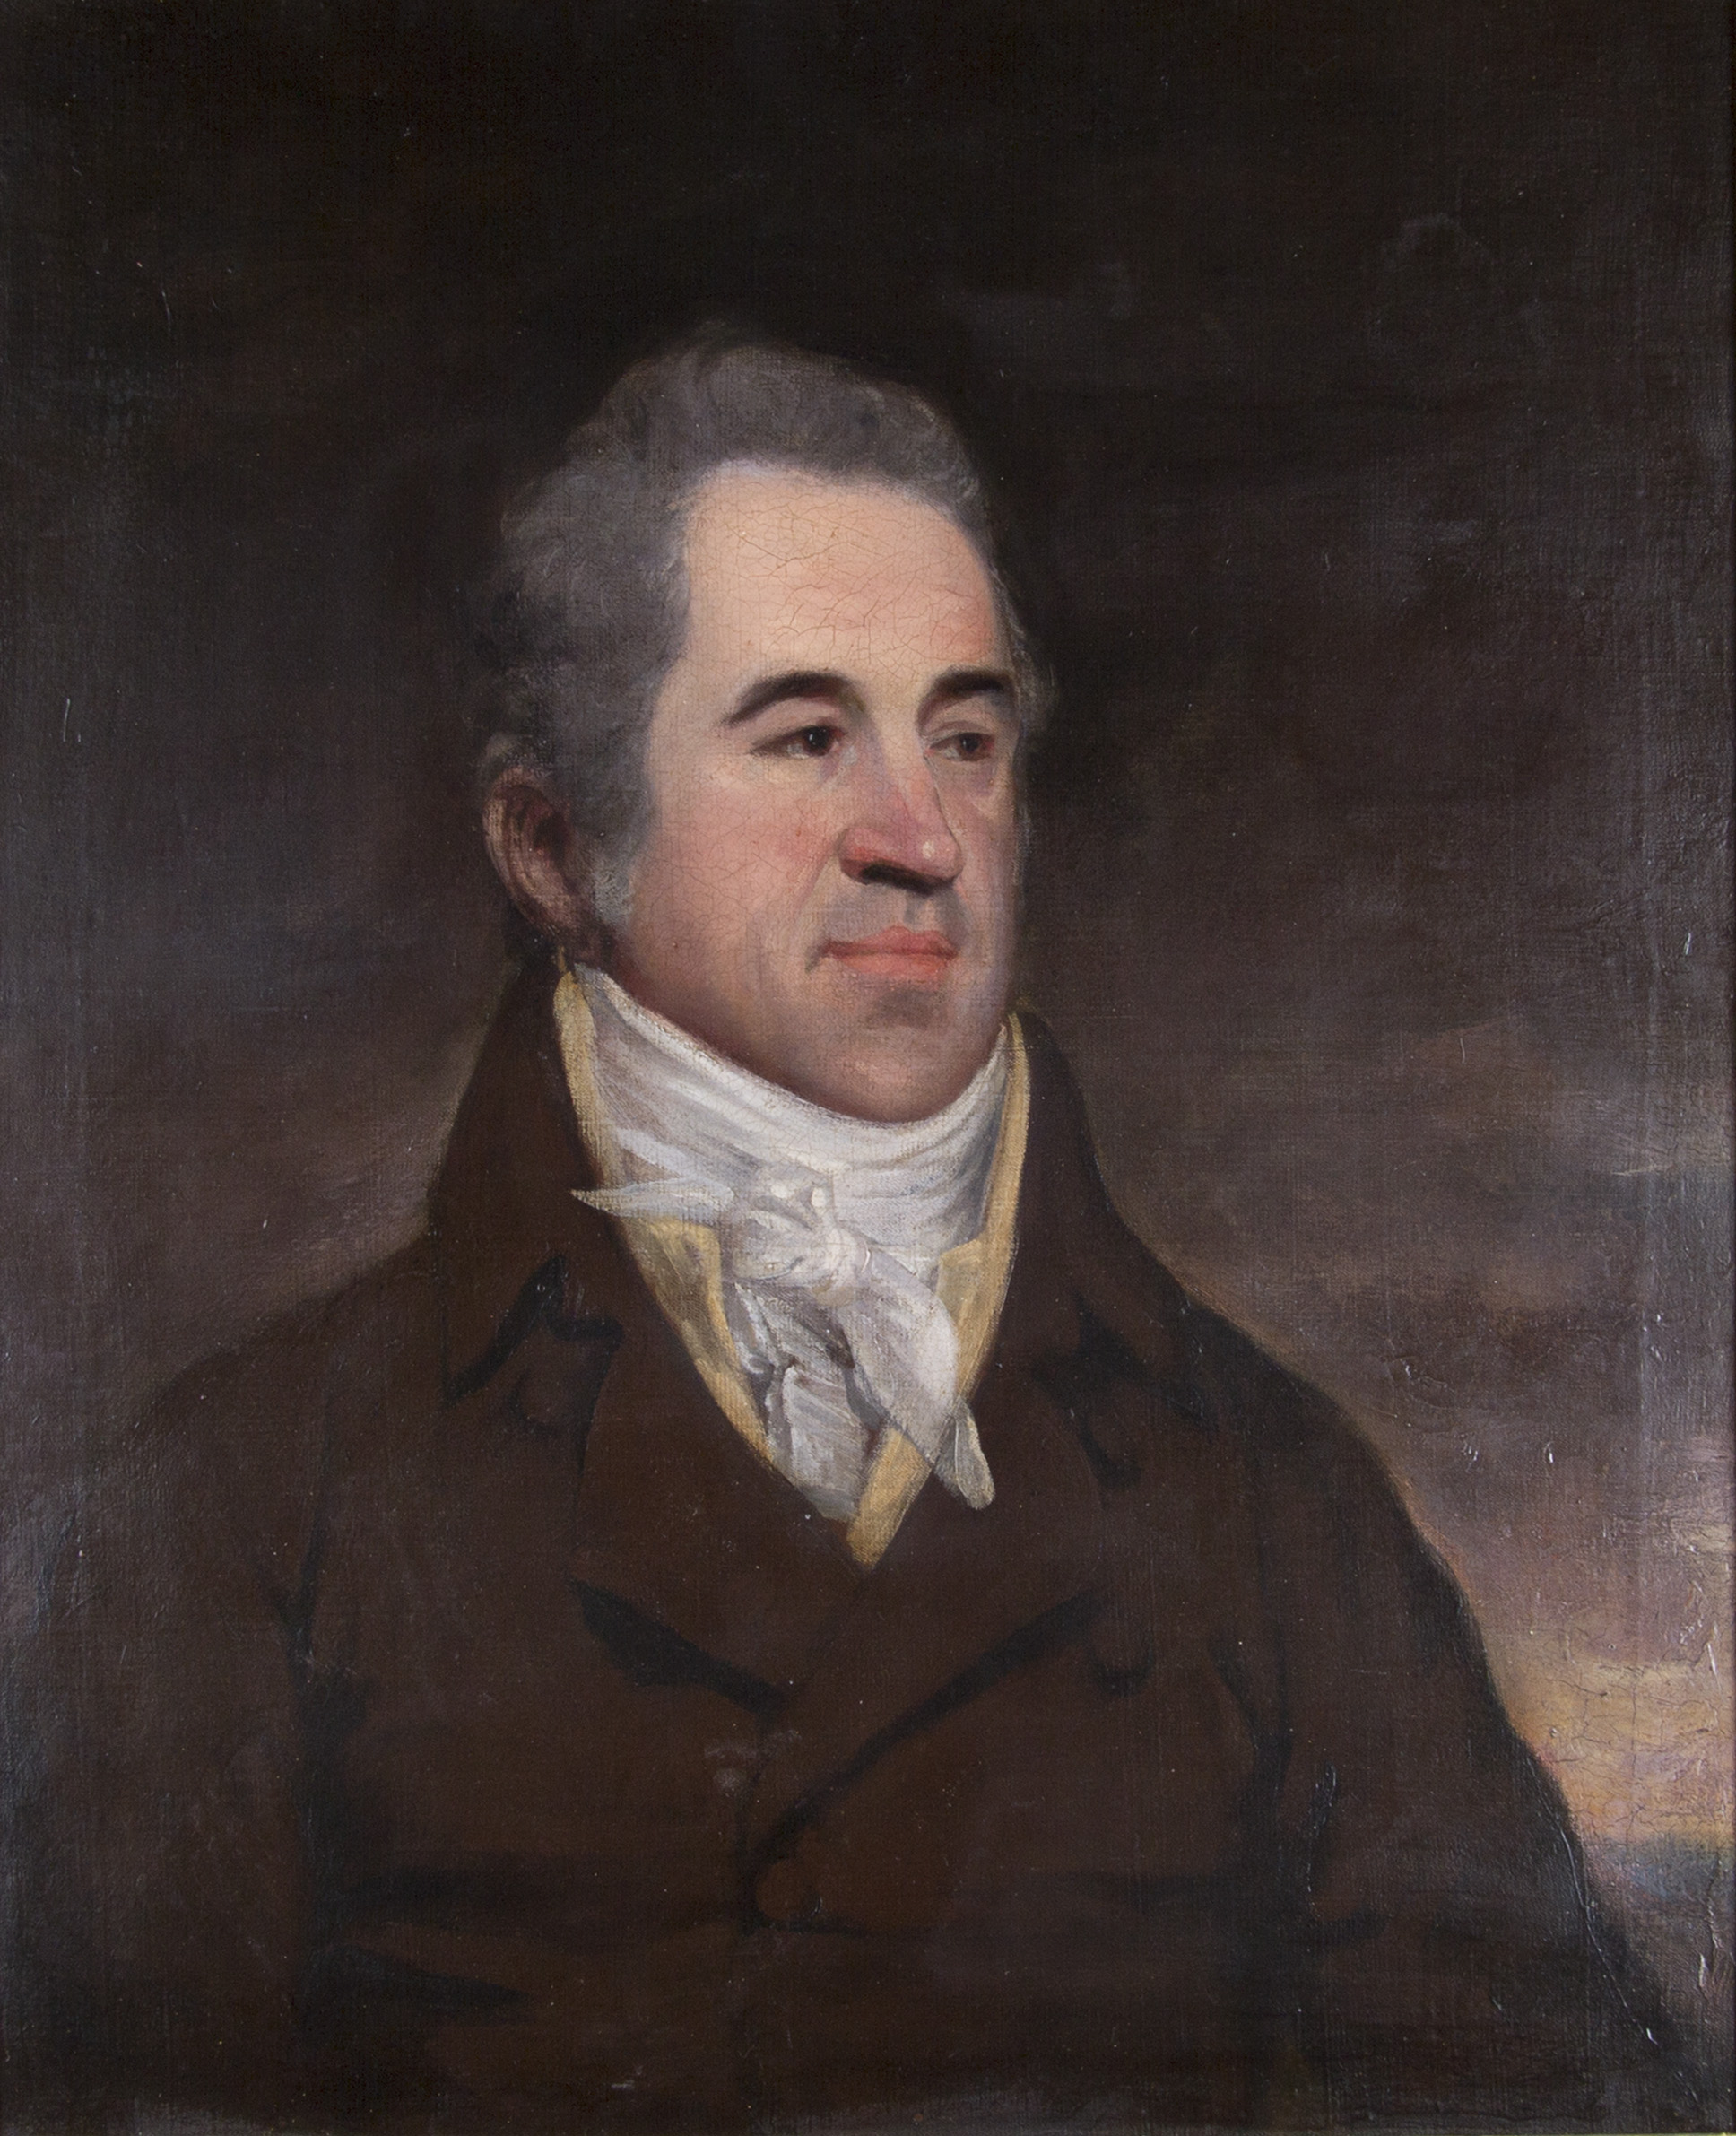 Framed, unsigned, oil on canvas, English School, bust length portrait of a Regency gentleman in